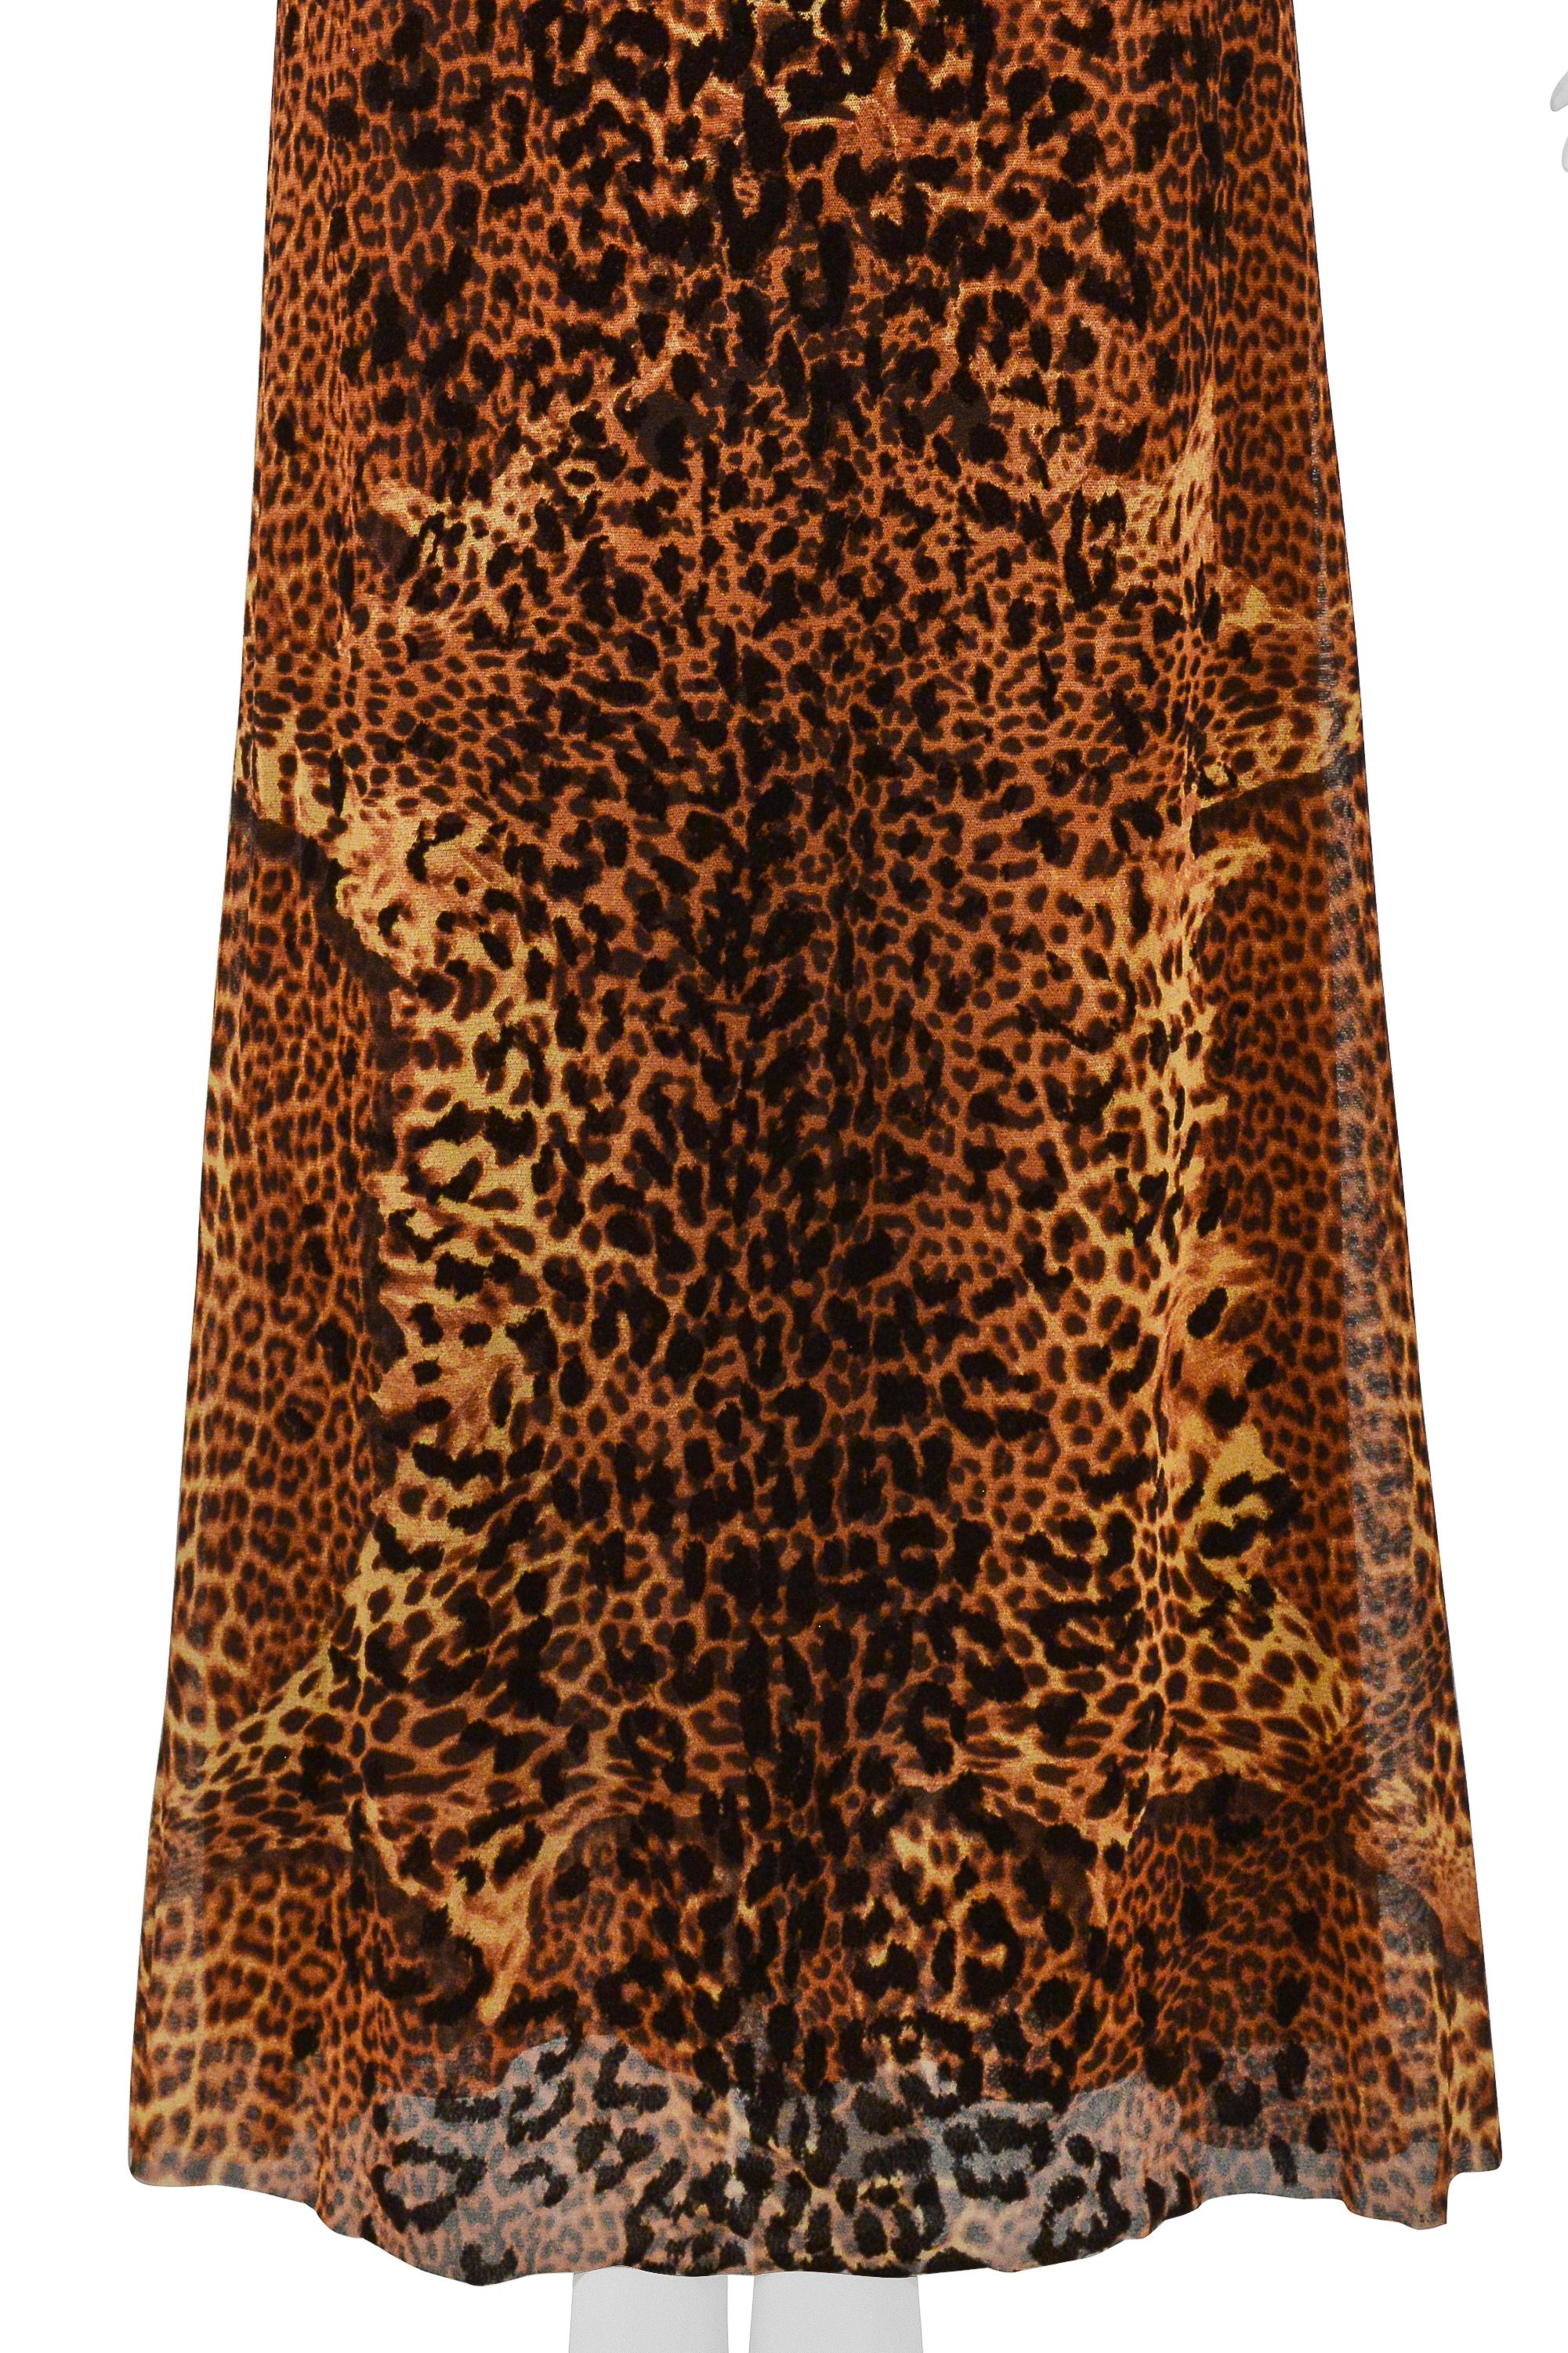 Jean Paul Gaultier Leopard Print Top & Skirt Ensemble 4